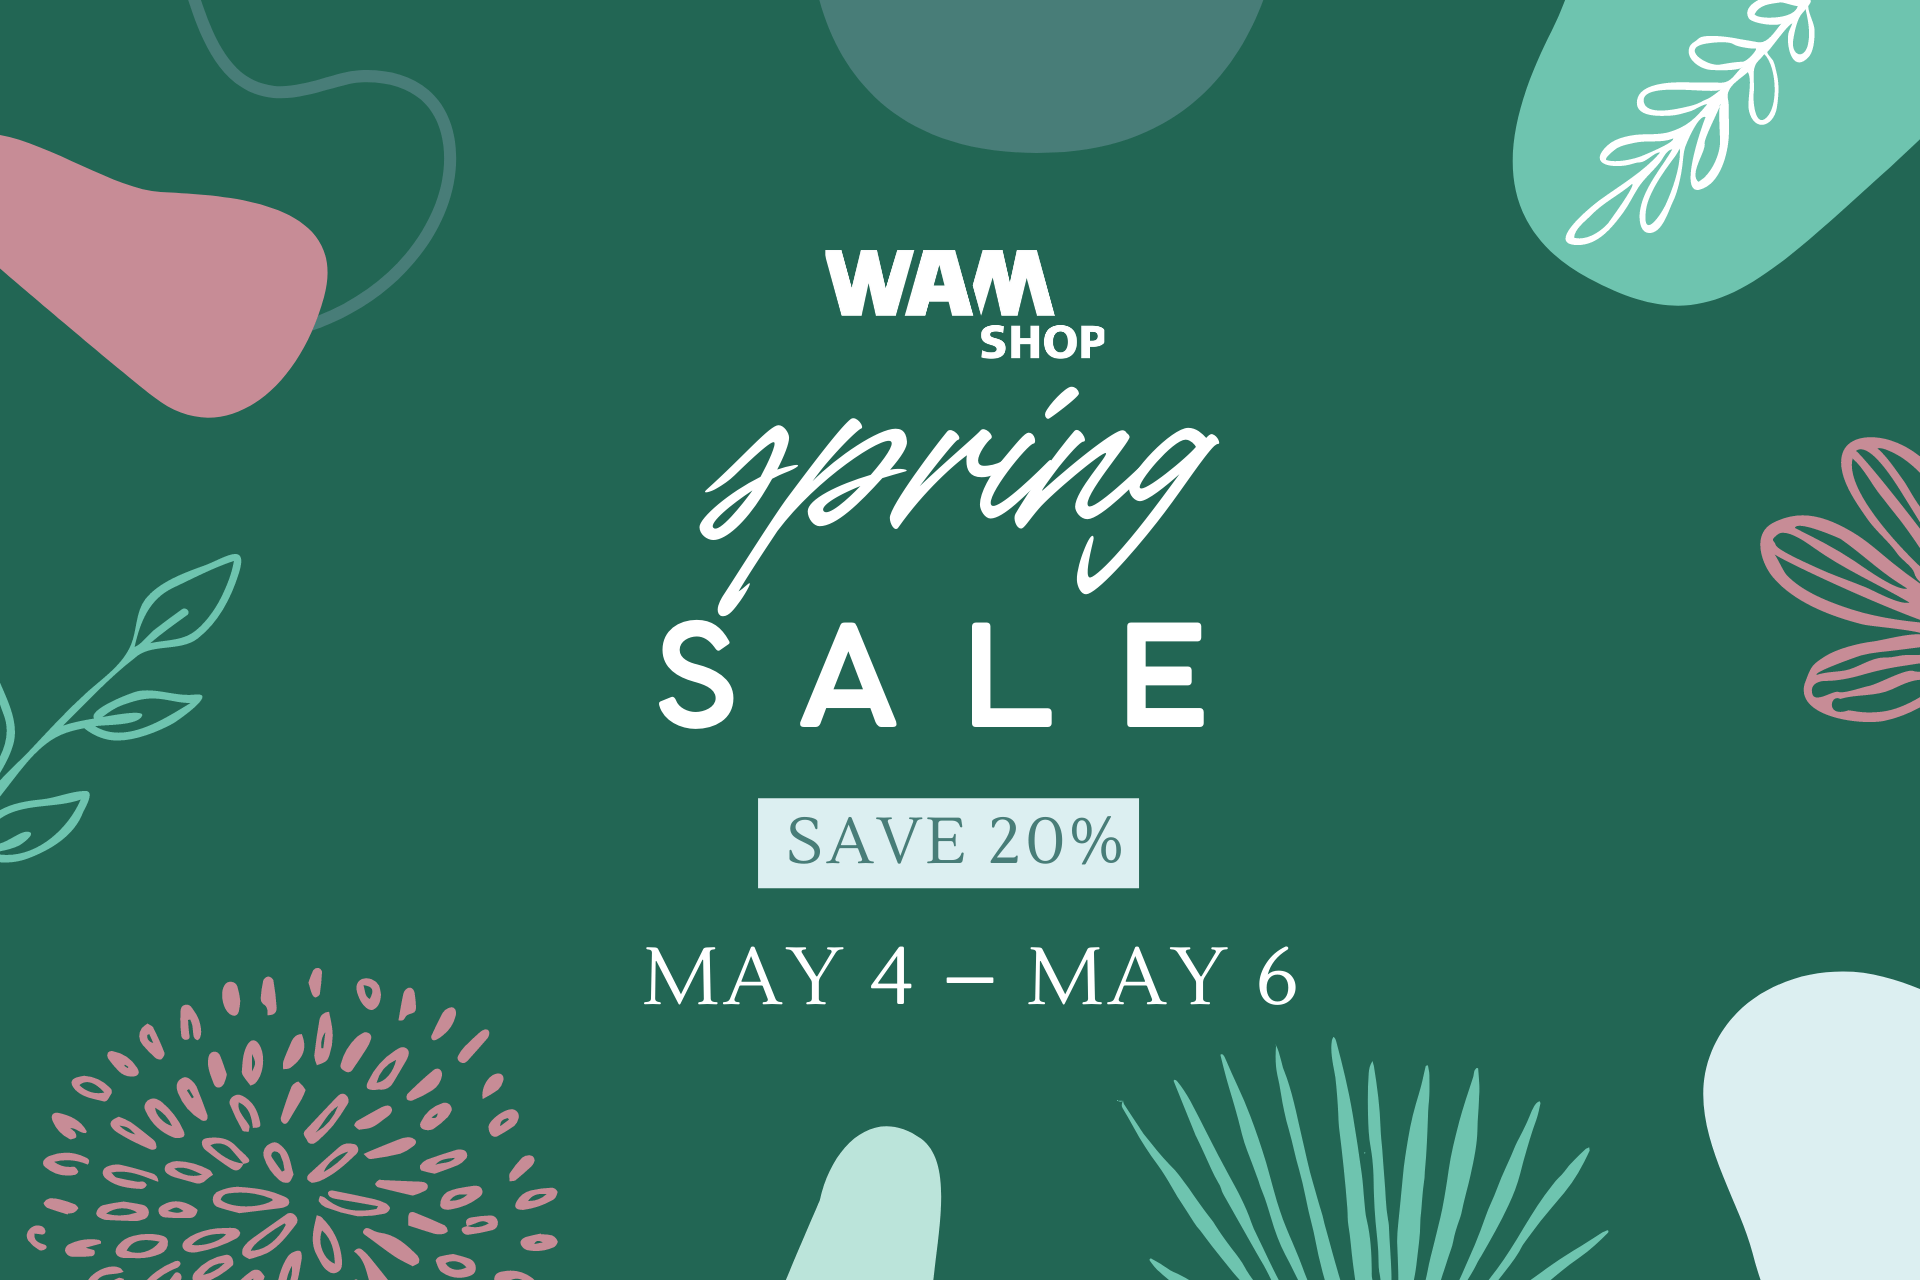 WAM shop spring sale sign